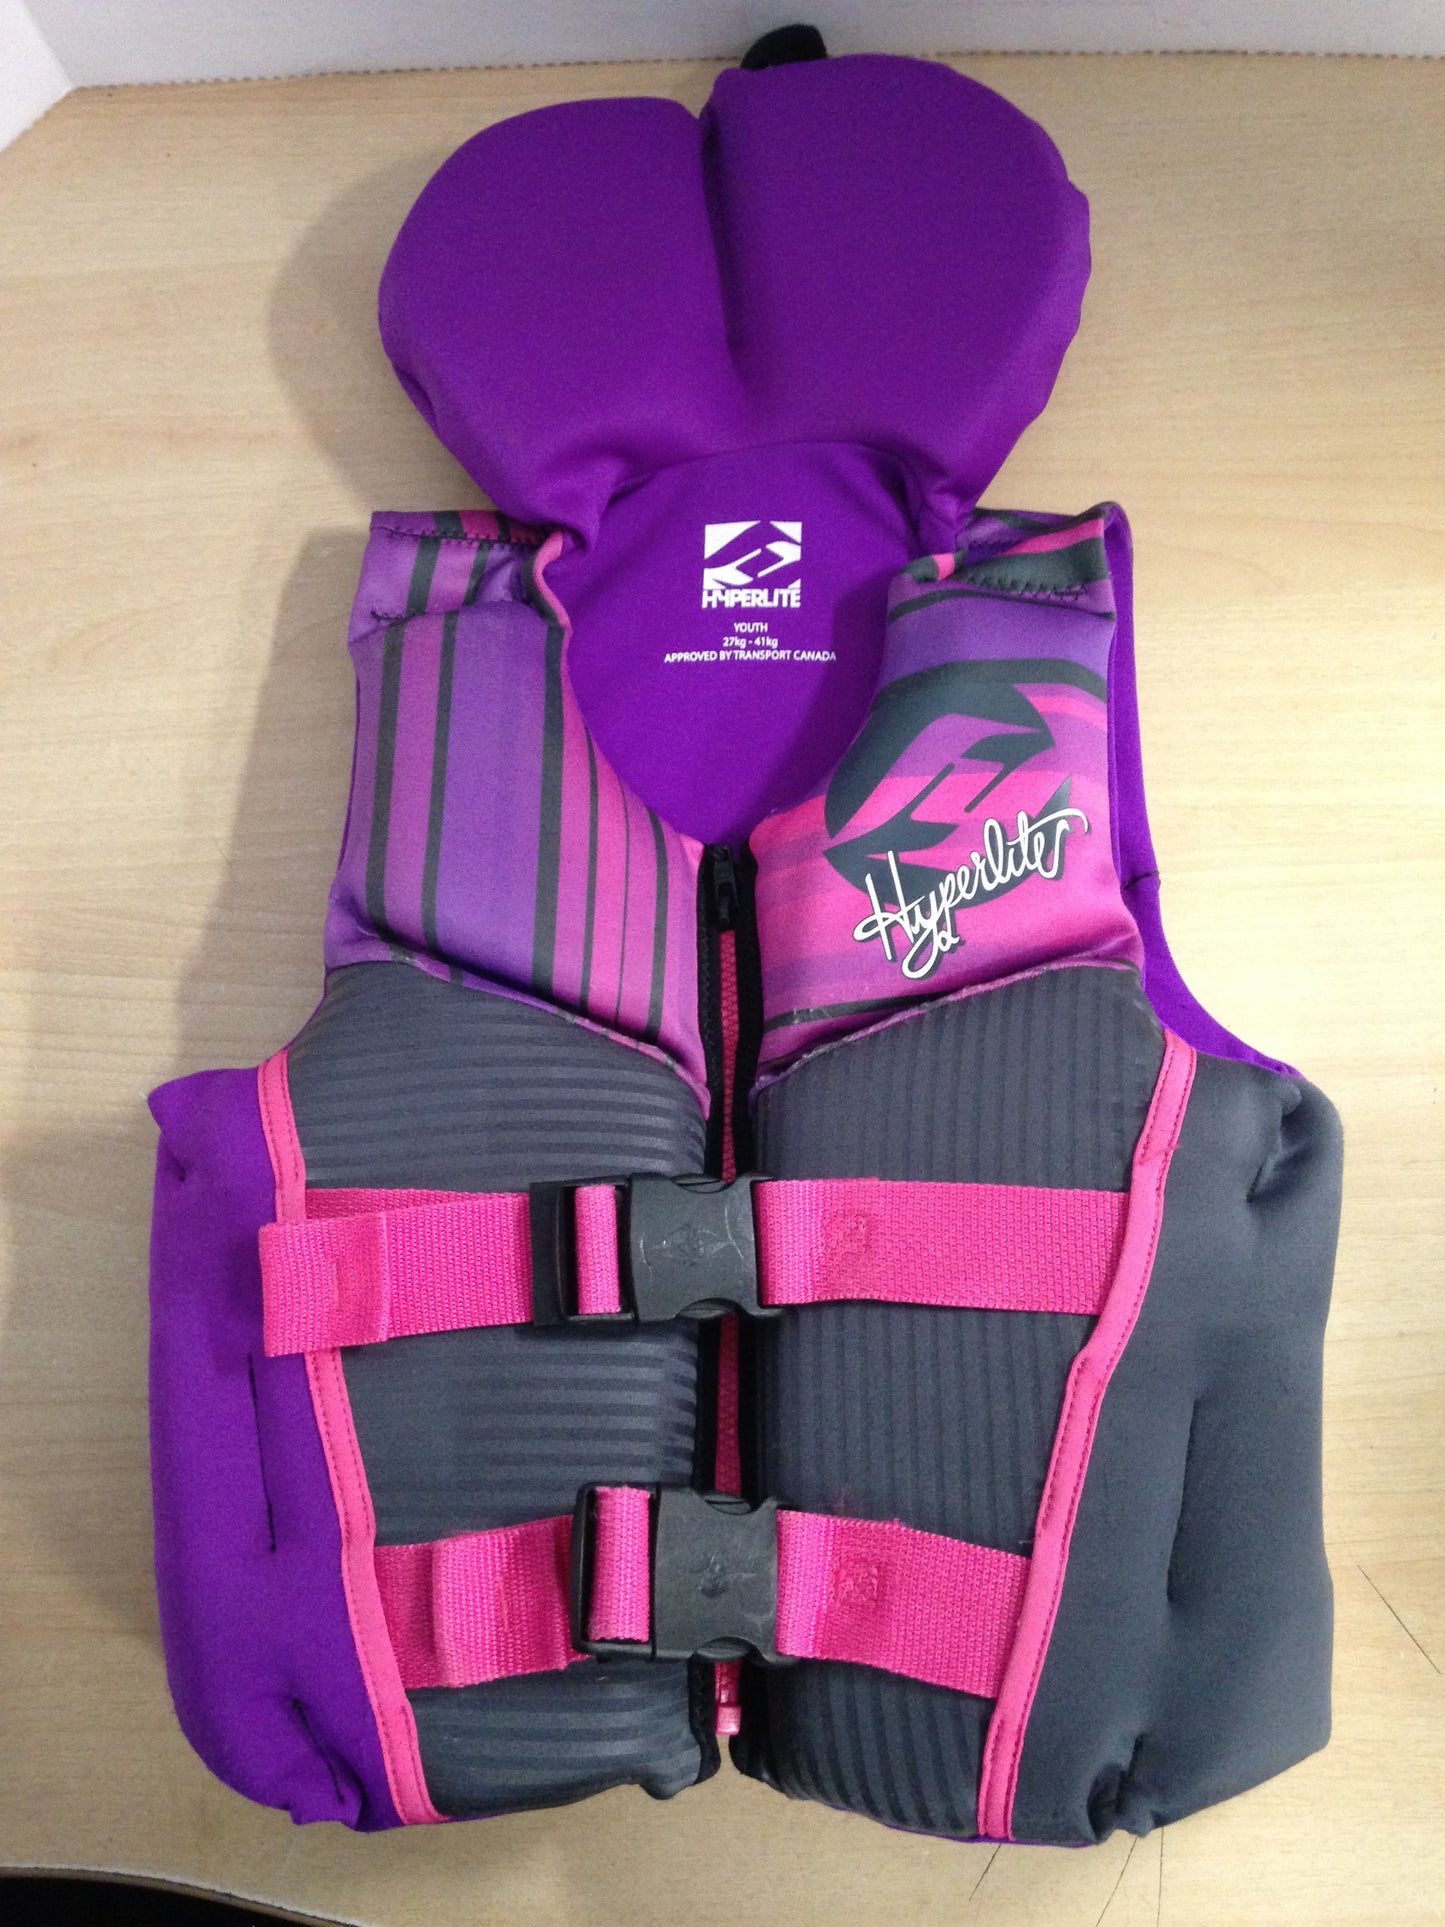 Life Jacket Child Size 60-90 lb Youth HyperLite Pink Purple Neoprene